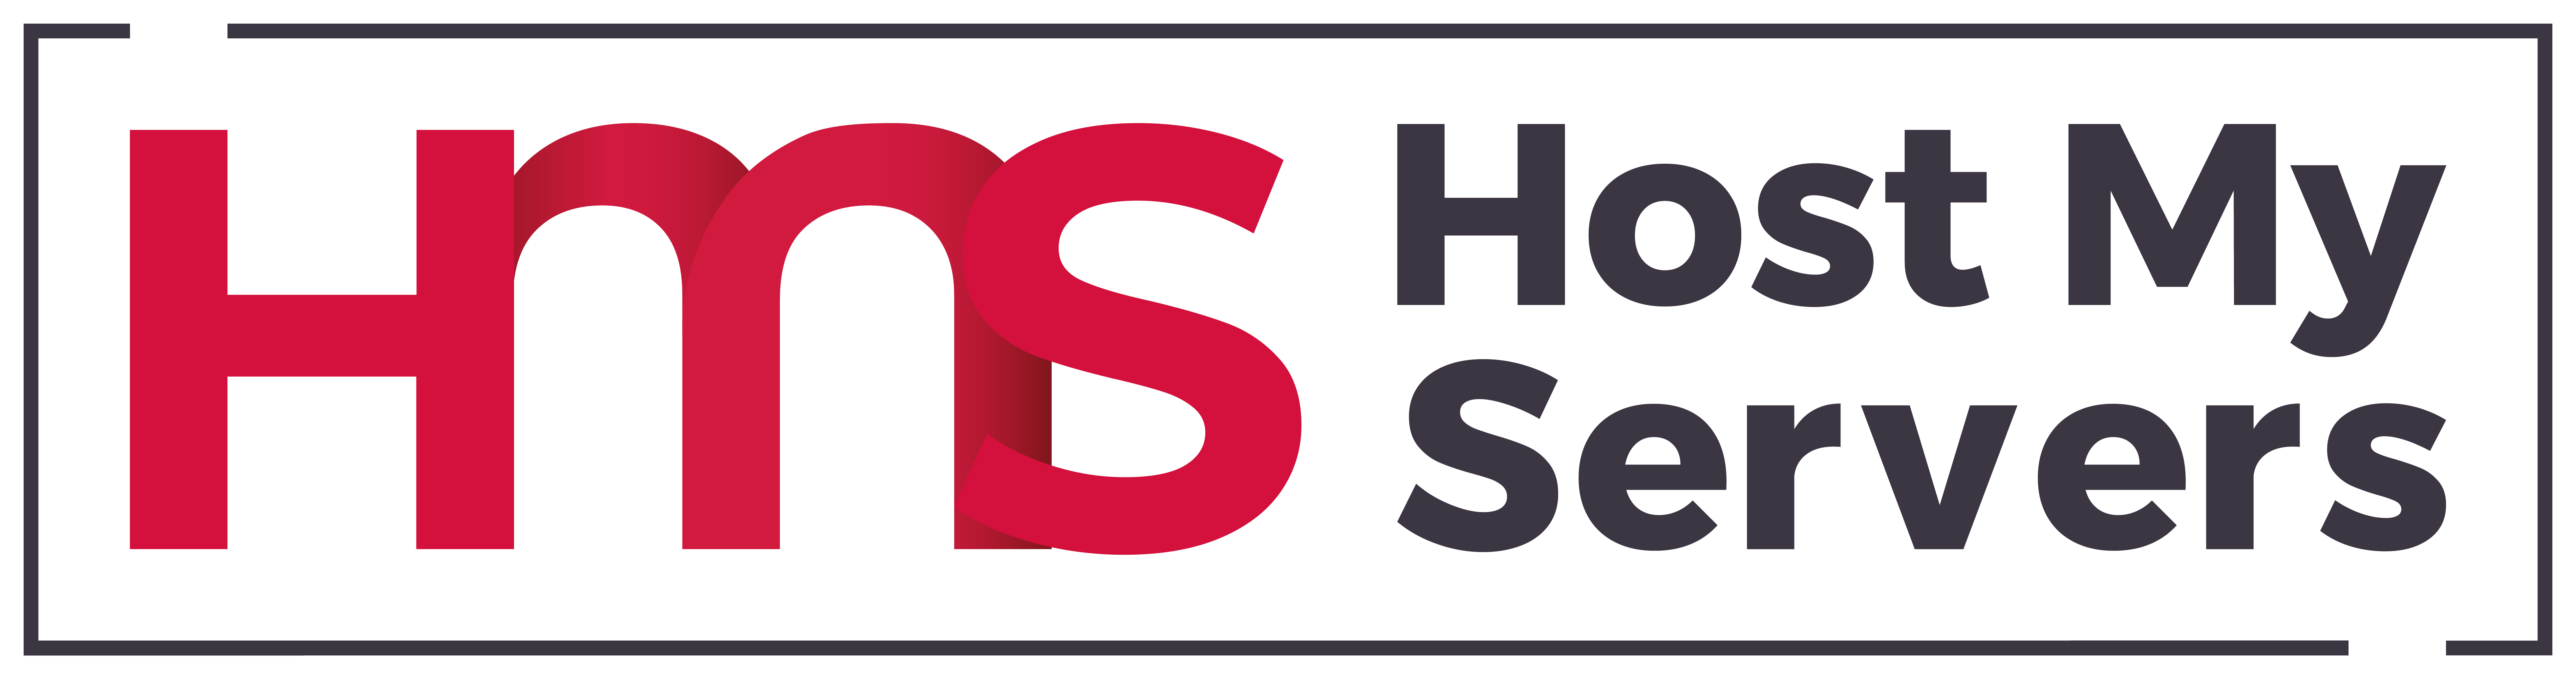 logo-hms